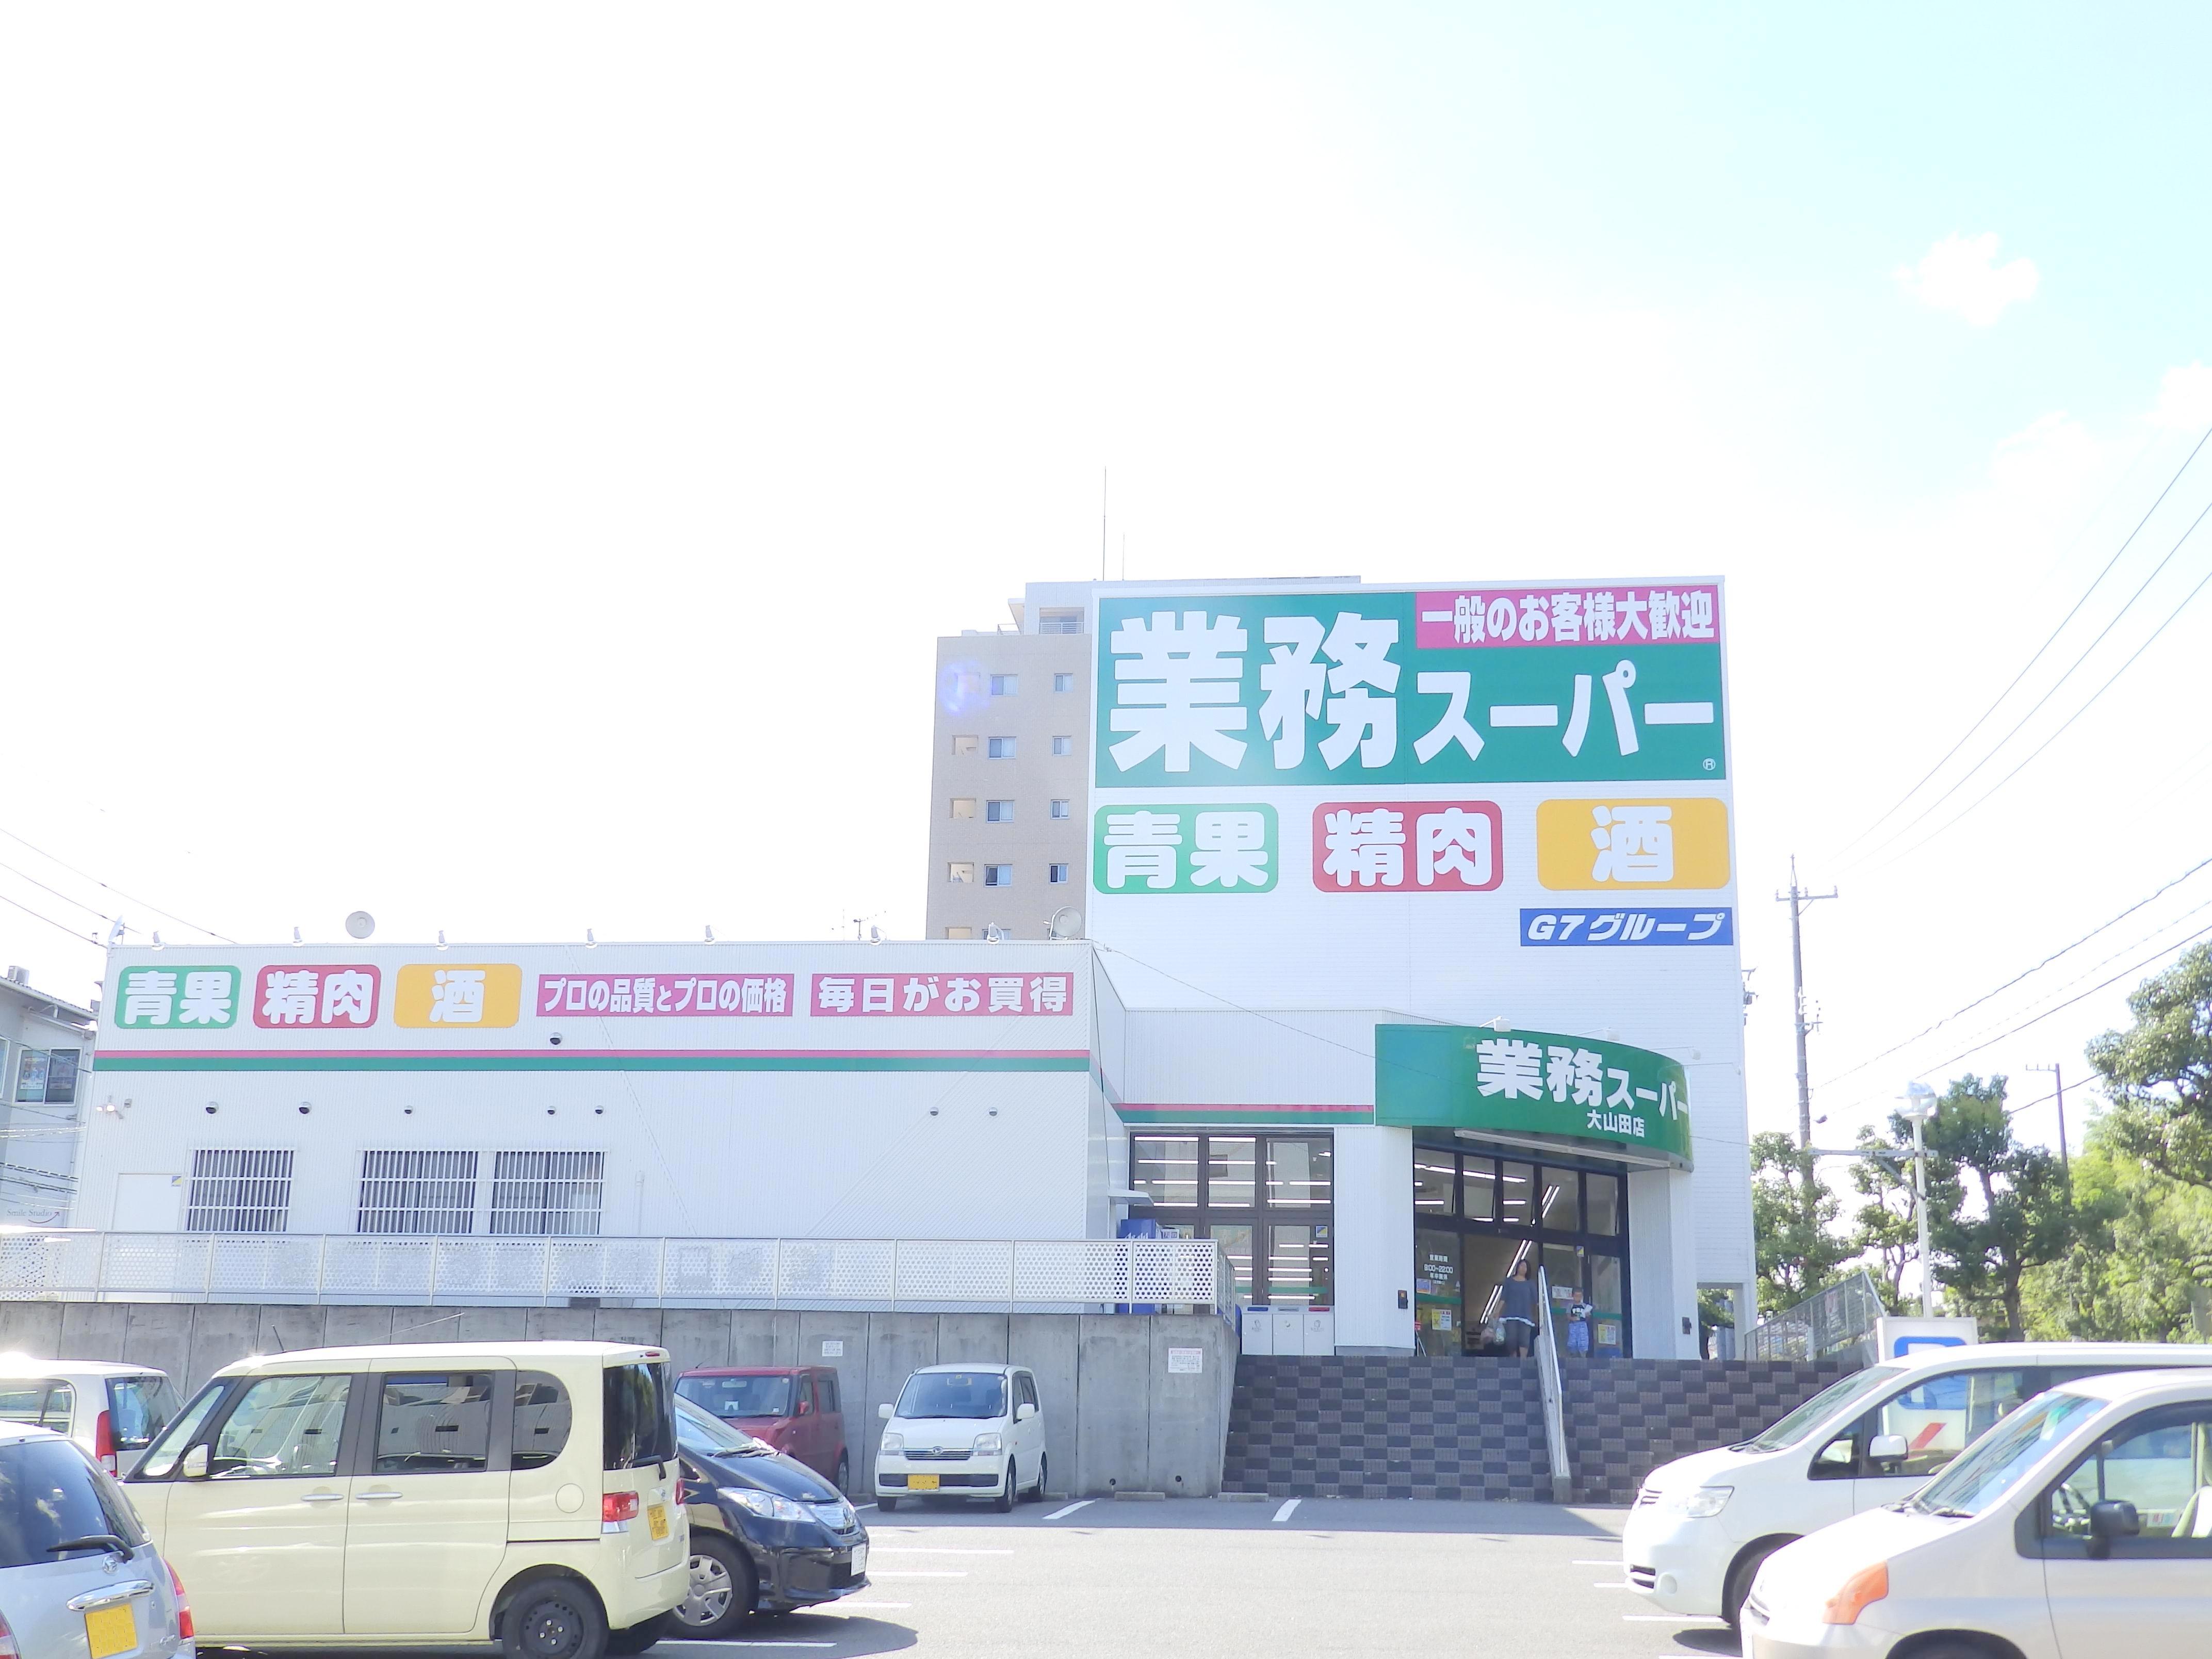 Supermarket. 1857m to business super Oyamada store (Super)